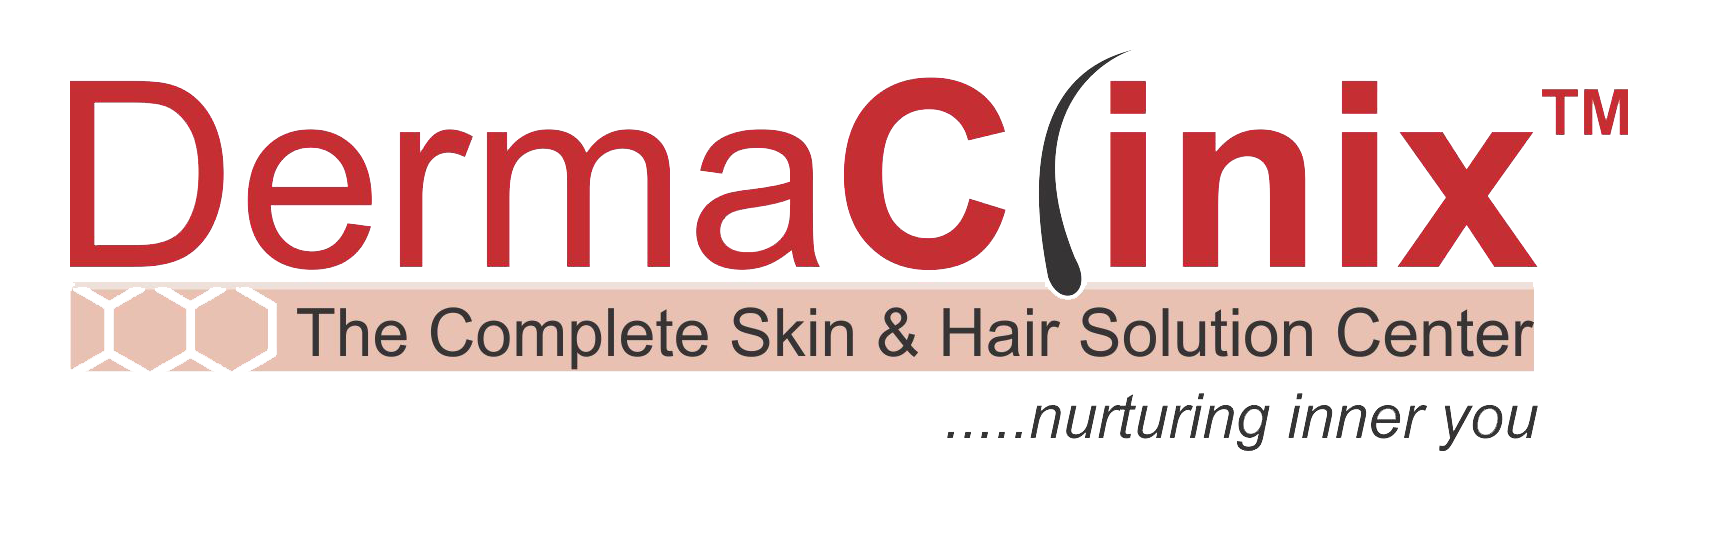 Dermaclinix The Complete Skin & Hair Solution Center